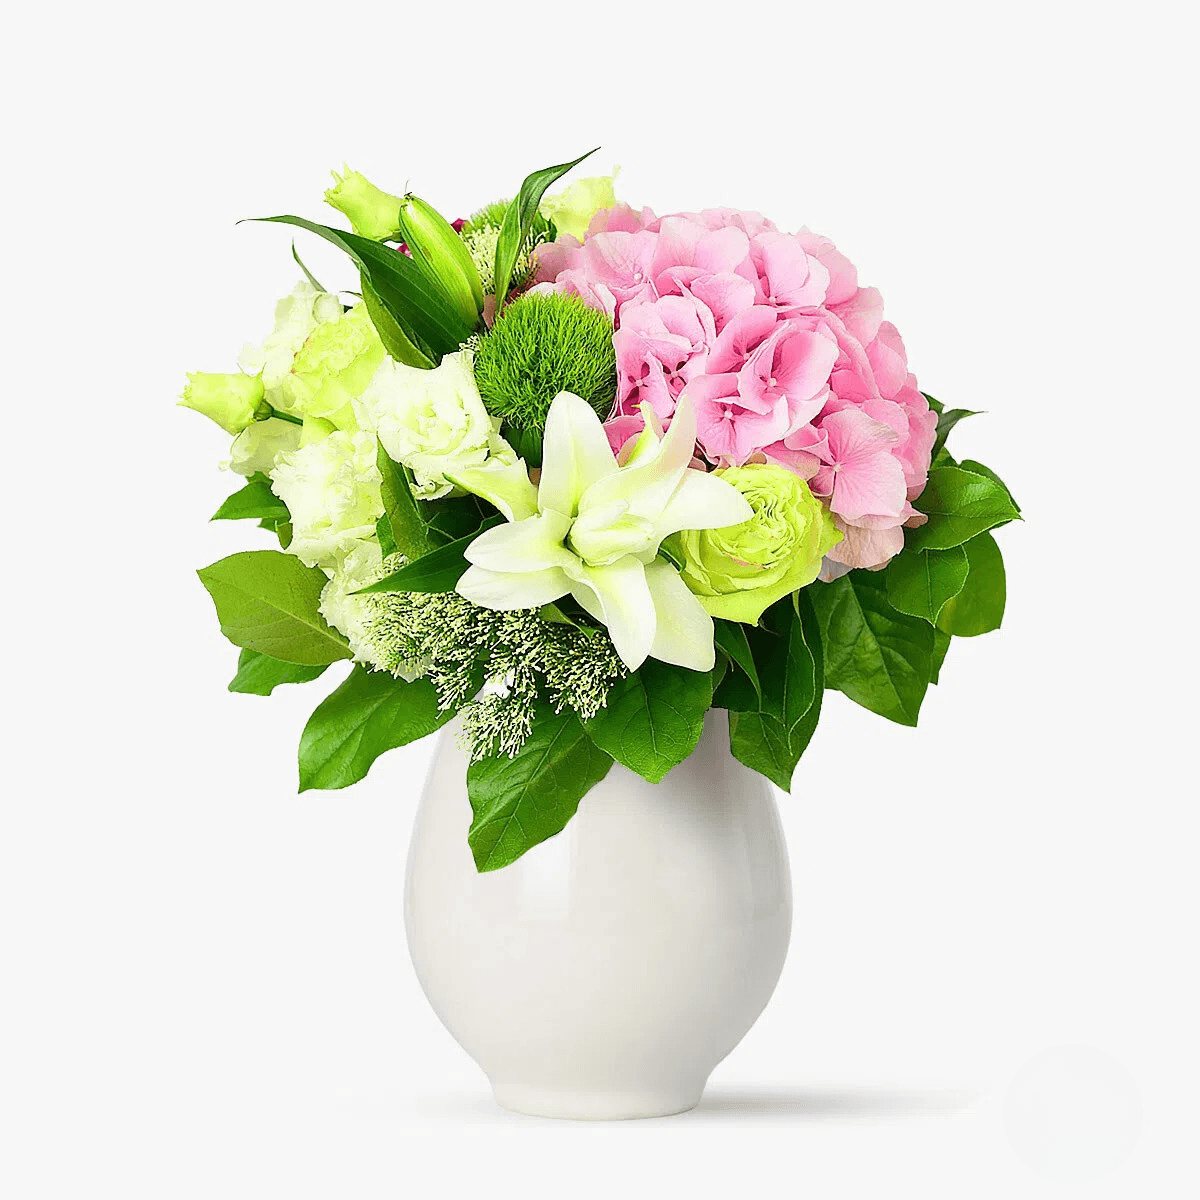 Buchet cu hortensie roz, crini albi, trandafiri lime, trachelium alb Amintirea verii